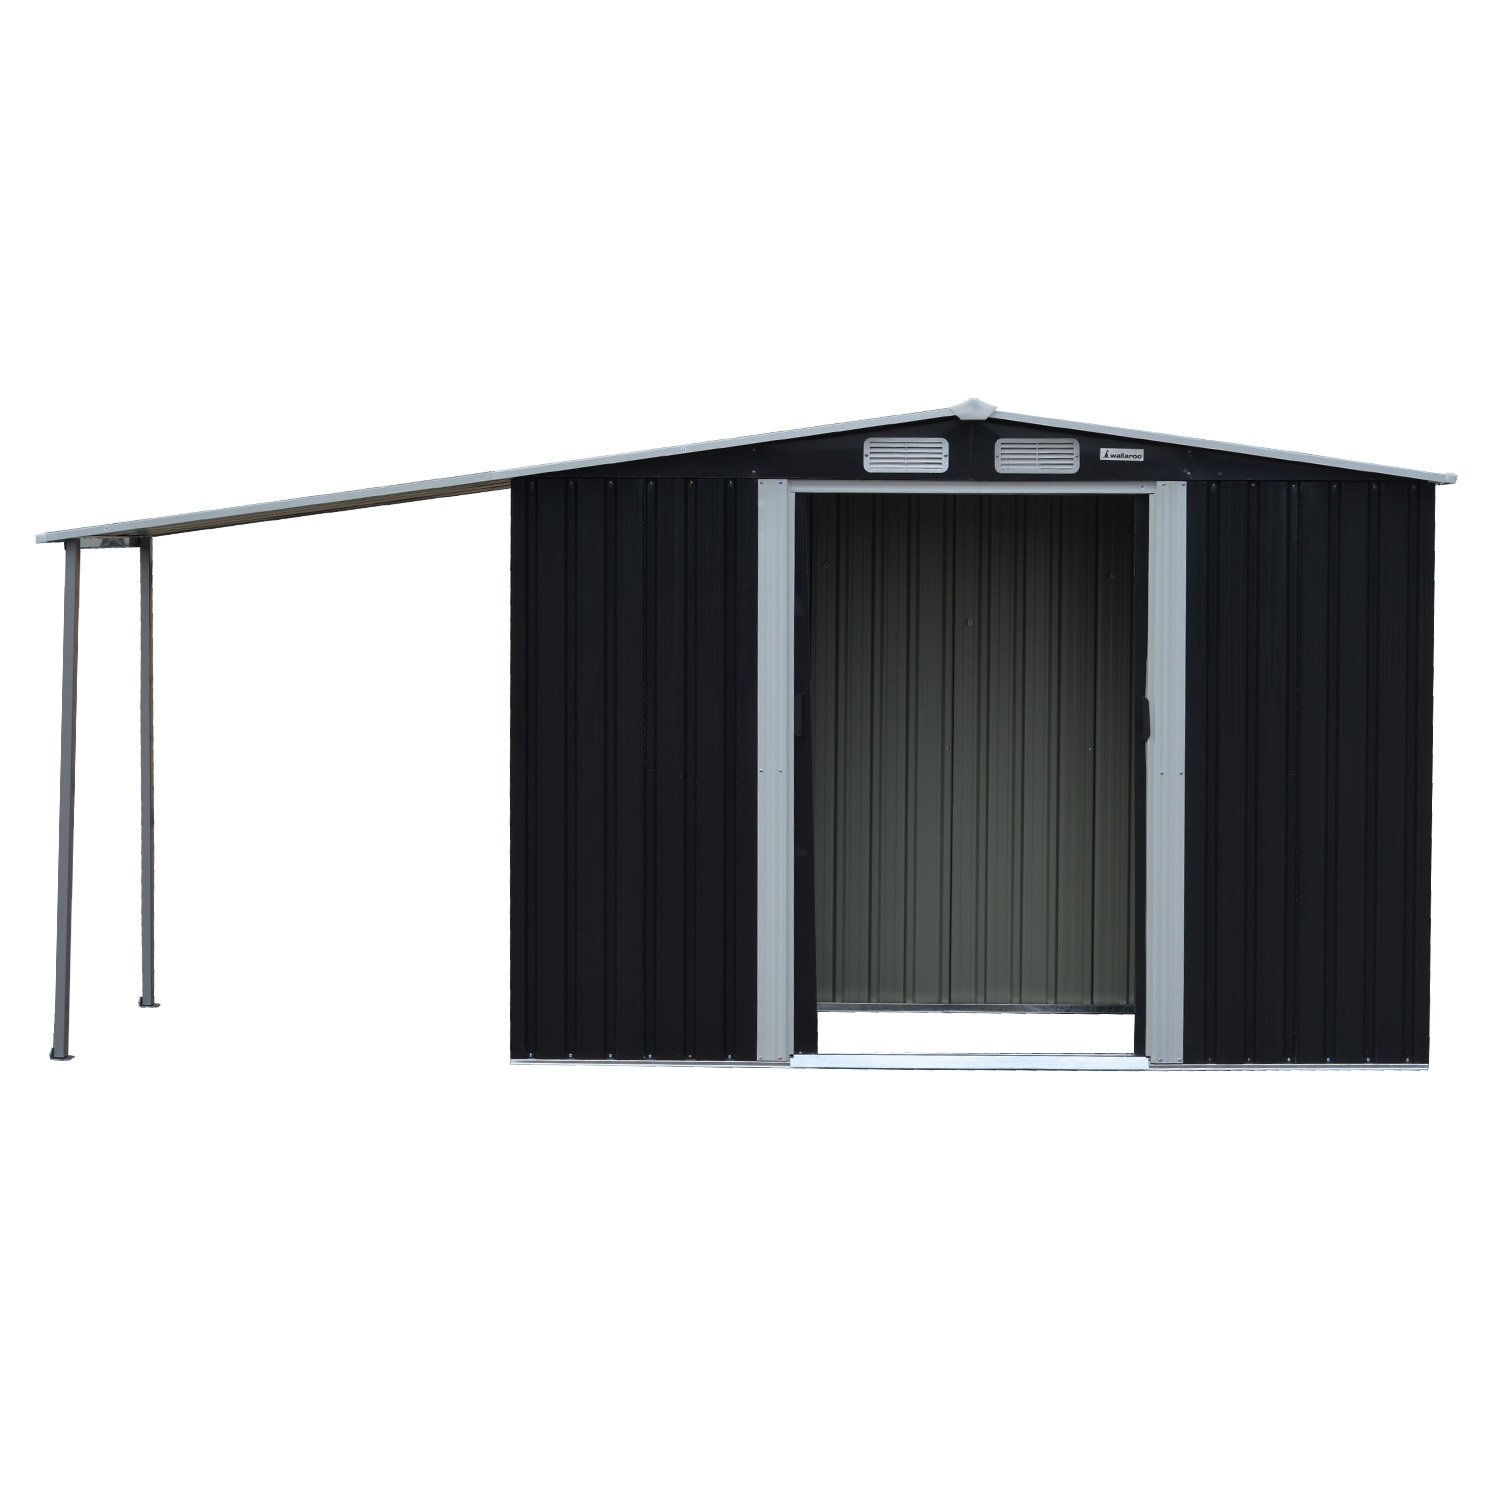 Wallaroo 4x8ft Zinc Steel Garden Shed with Open Storage - Black 2